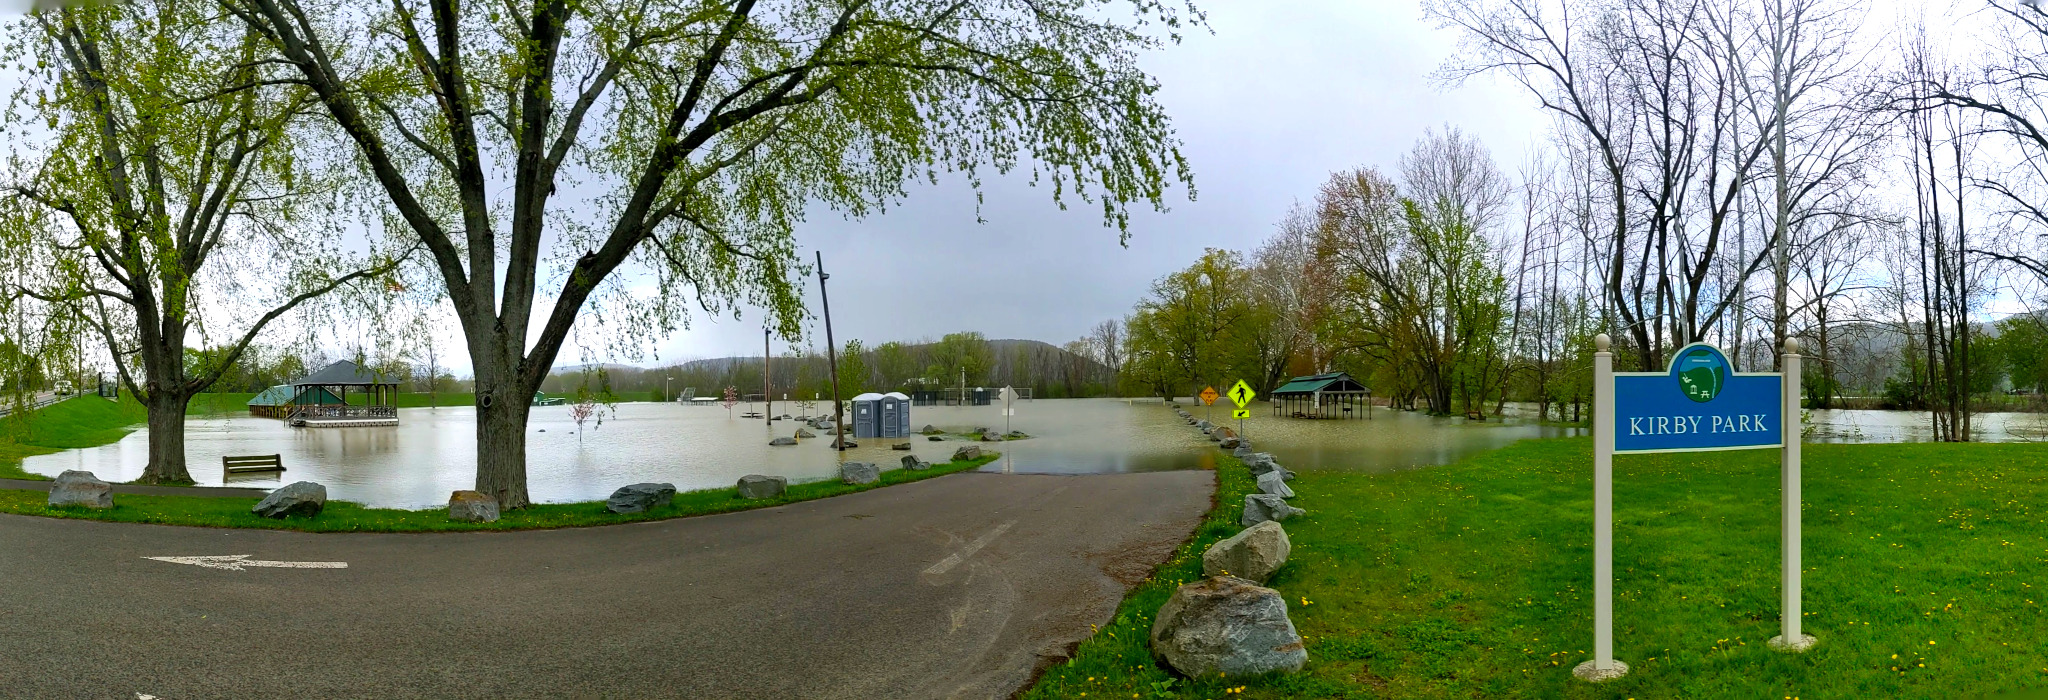 Flooding at Kirby Park in Nichols, NY